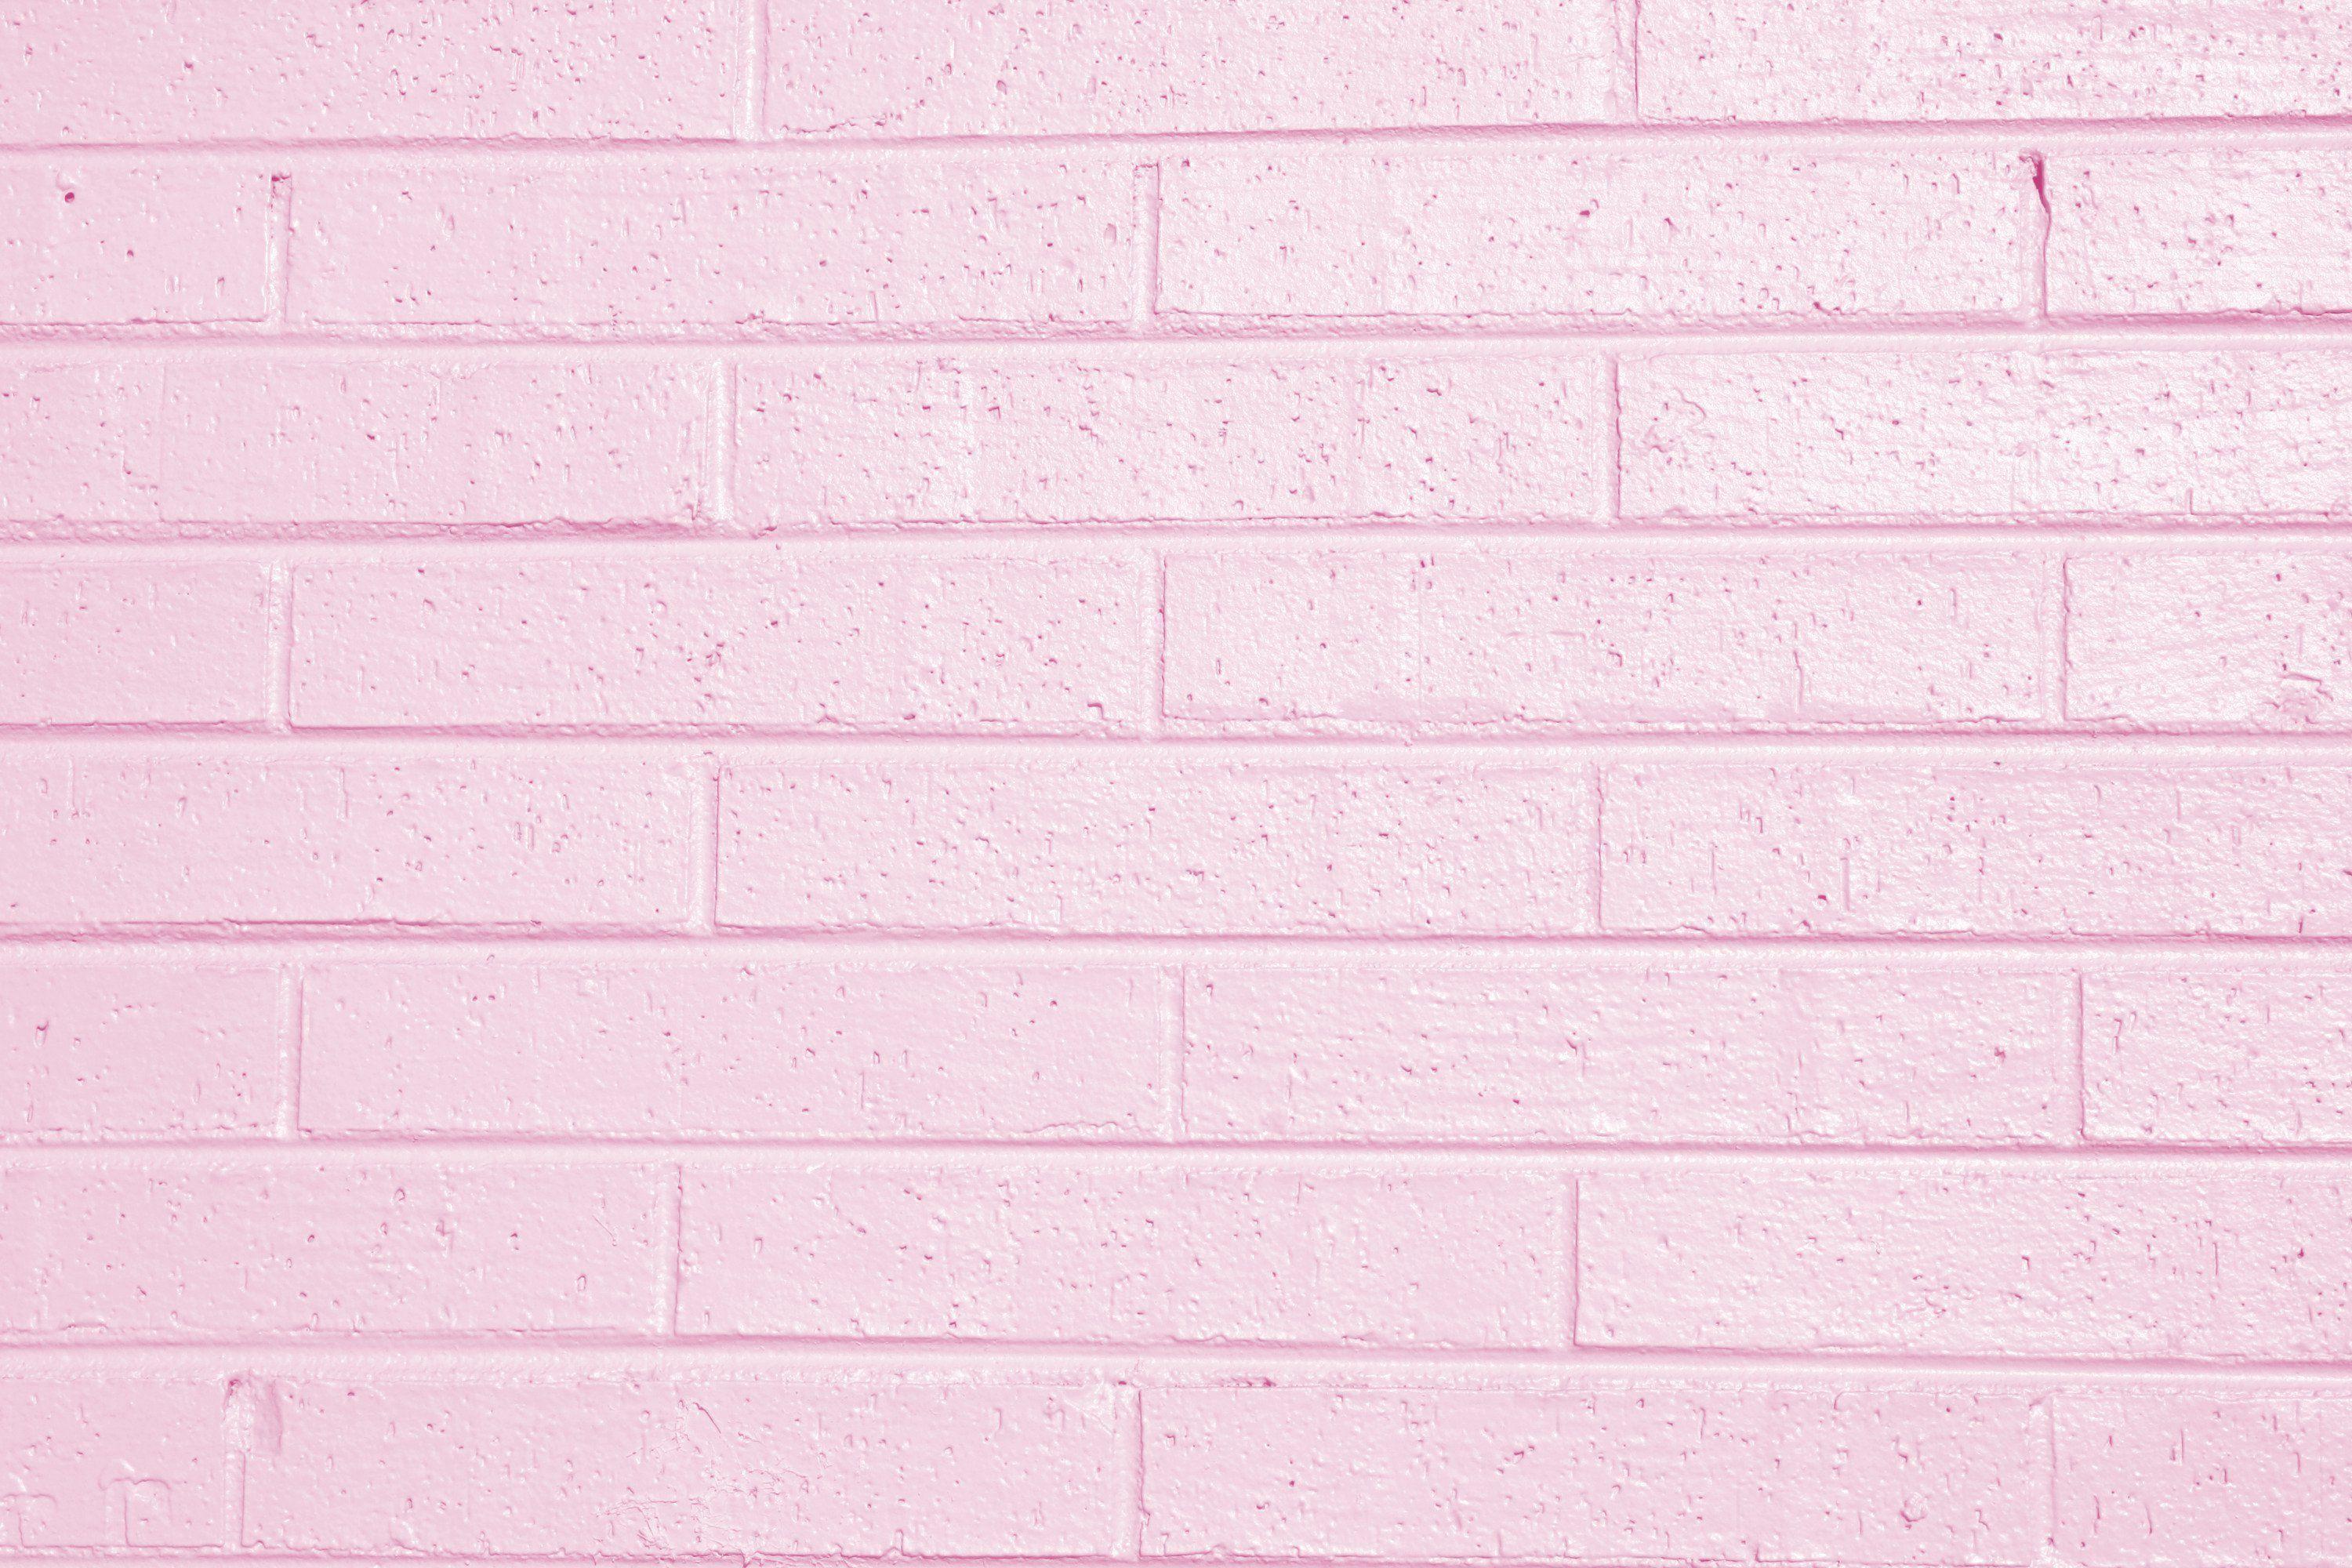 HD Light Pink Background